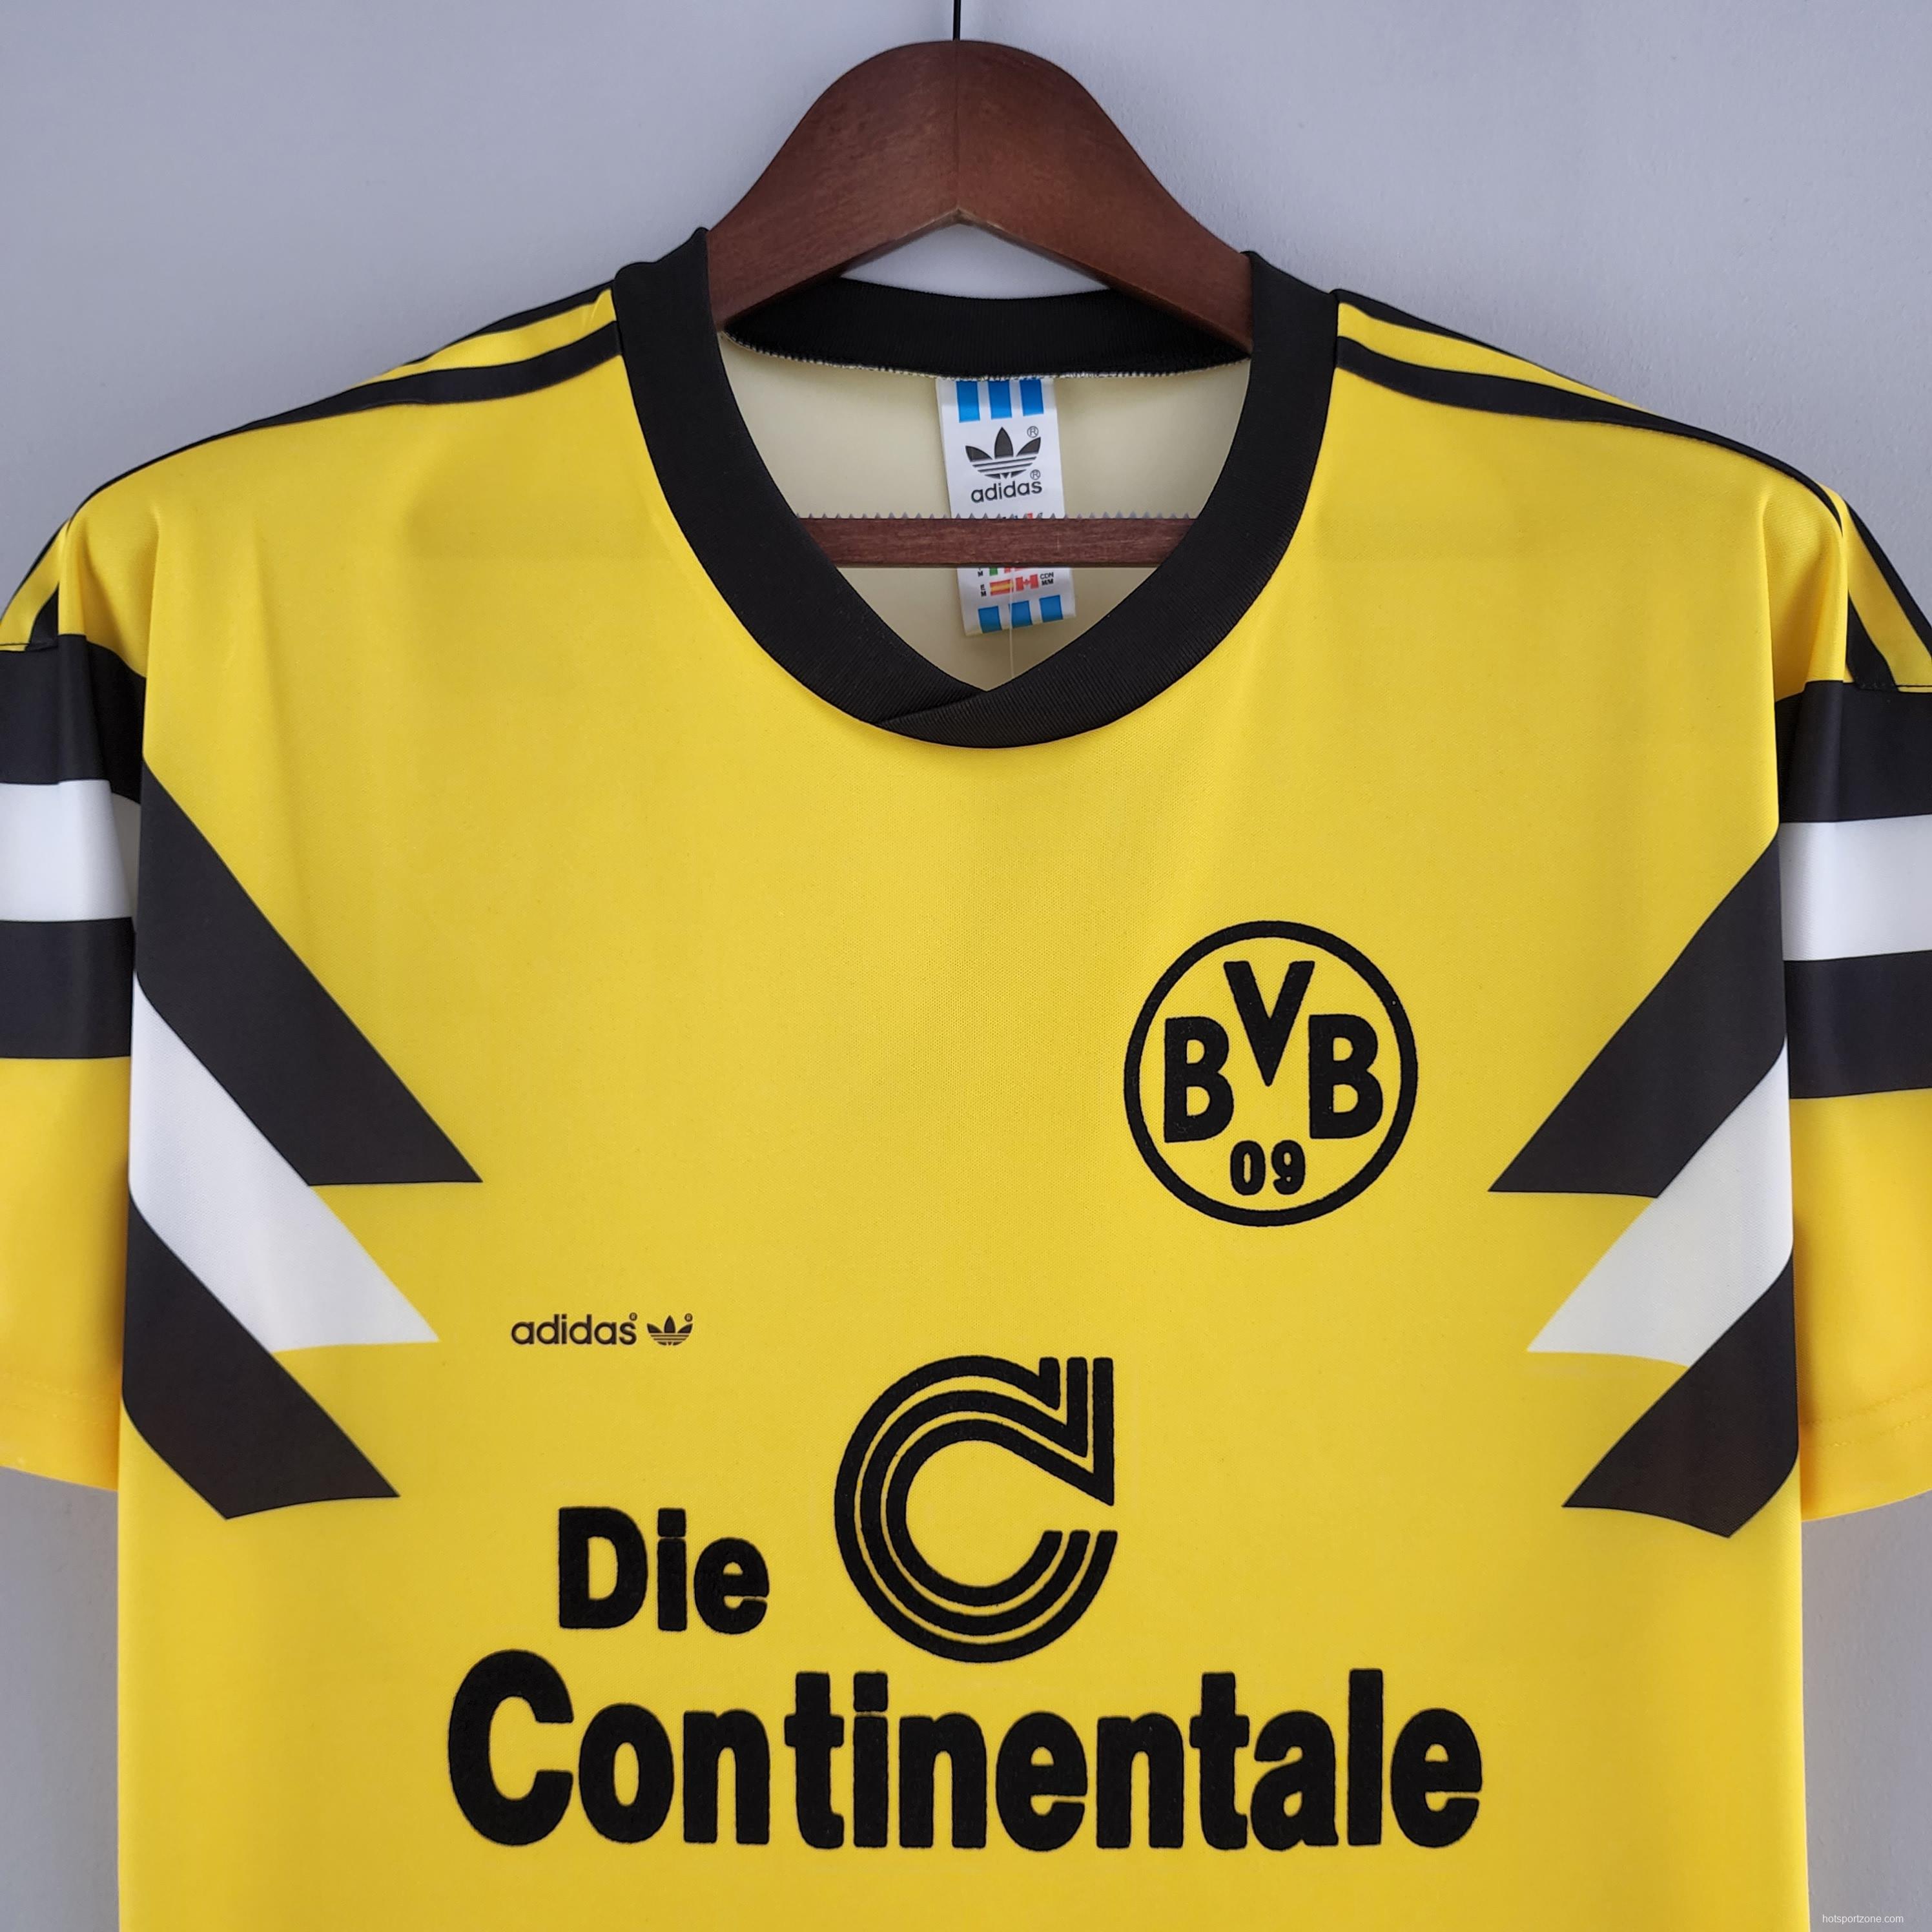 Retro 1989 Dortmund Home Soccer Jersey